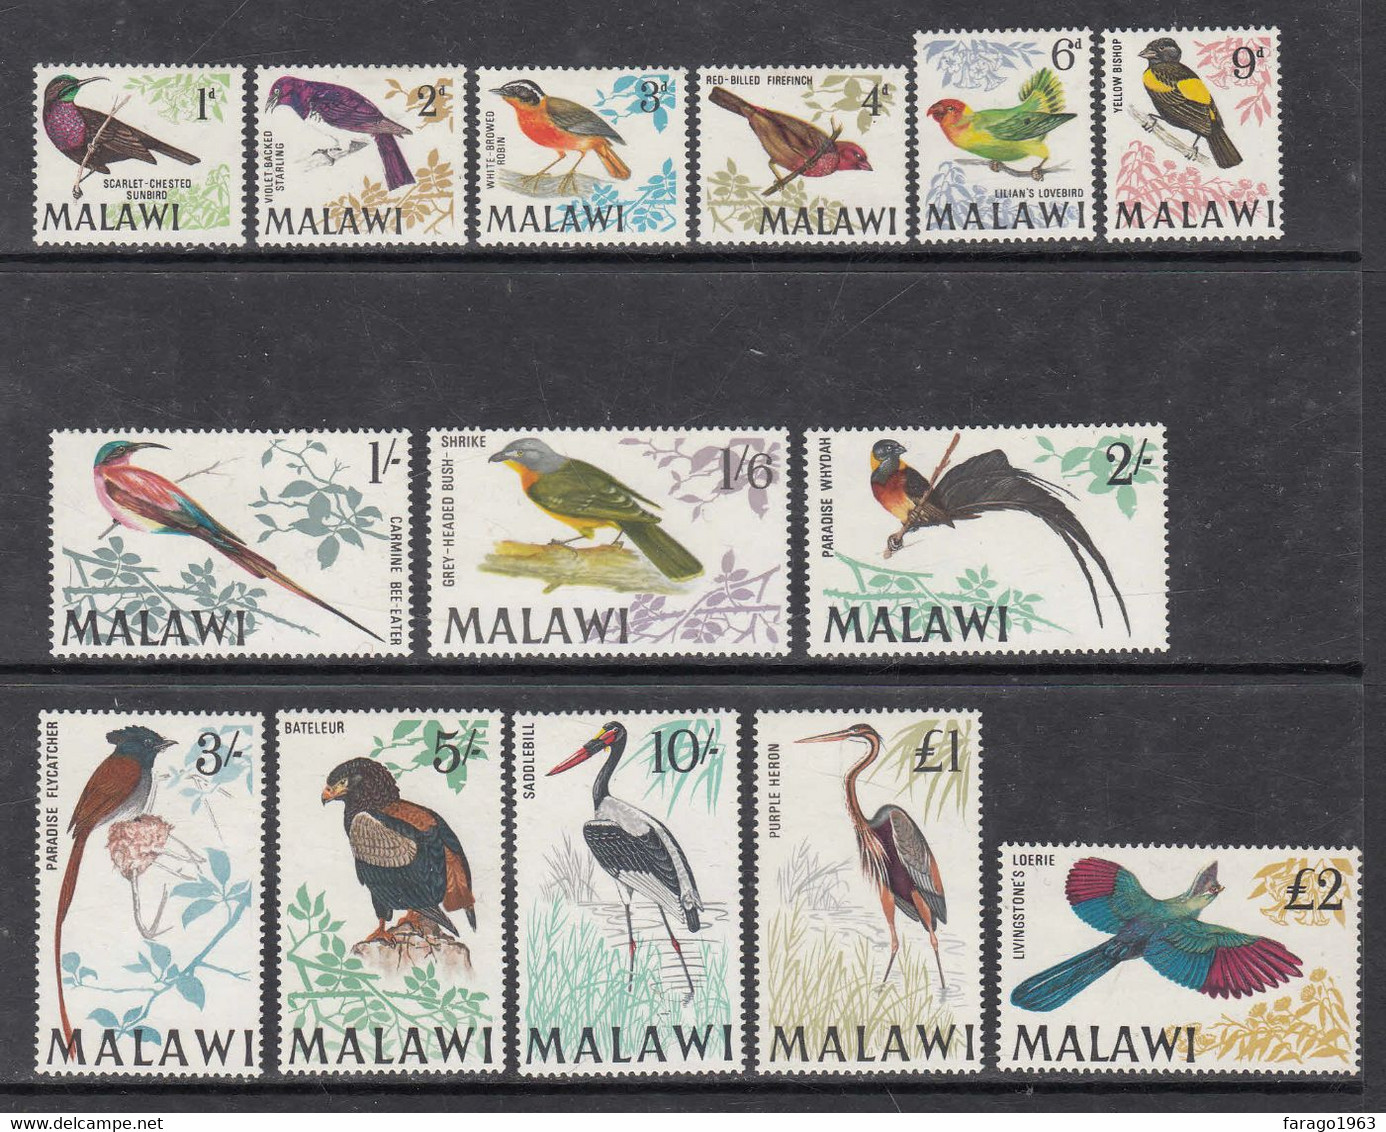 1968 Malawi Birds Oiseaux Definitives Complete Set Of 14 MNH - Malawi (1964-...)